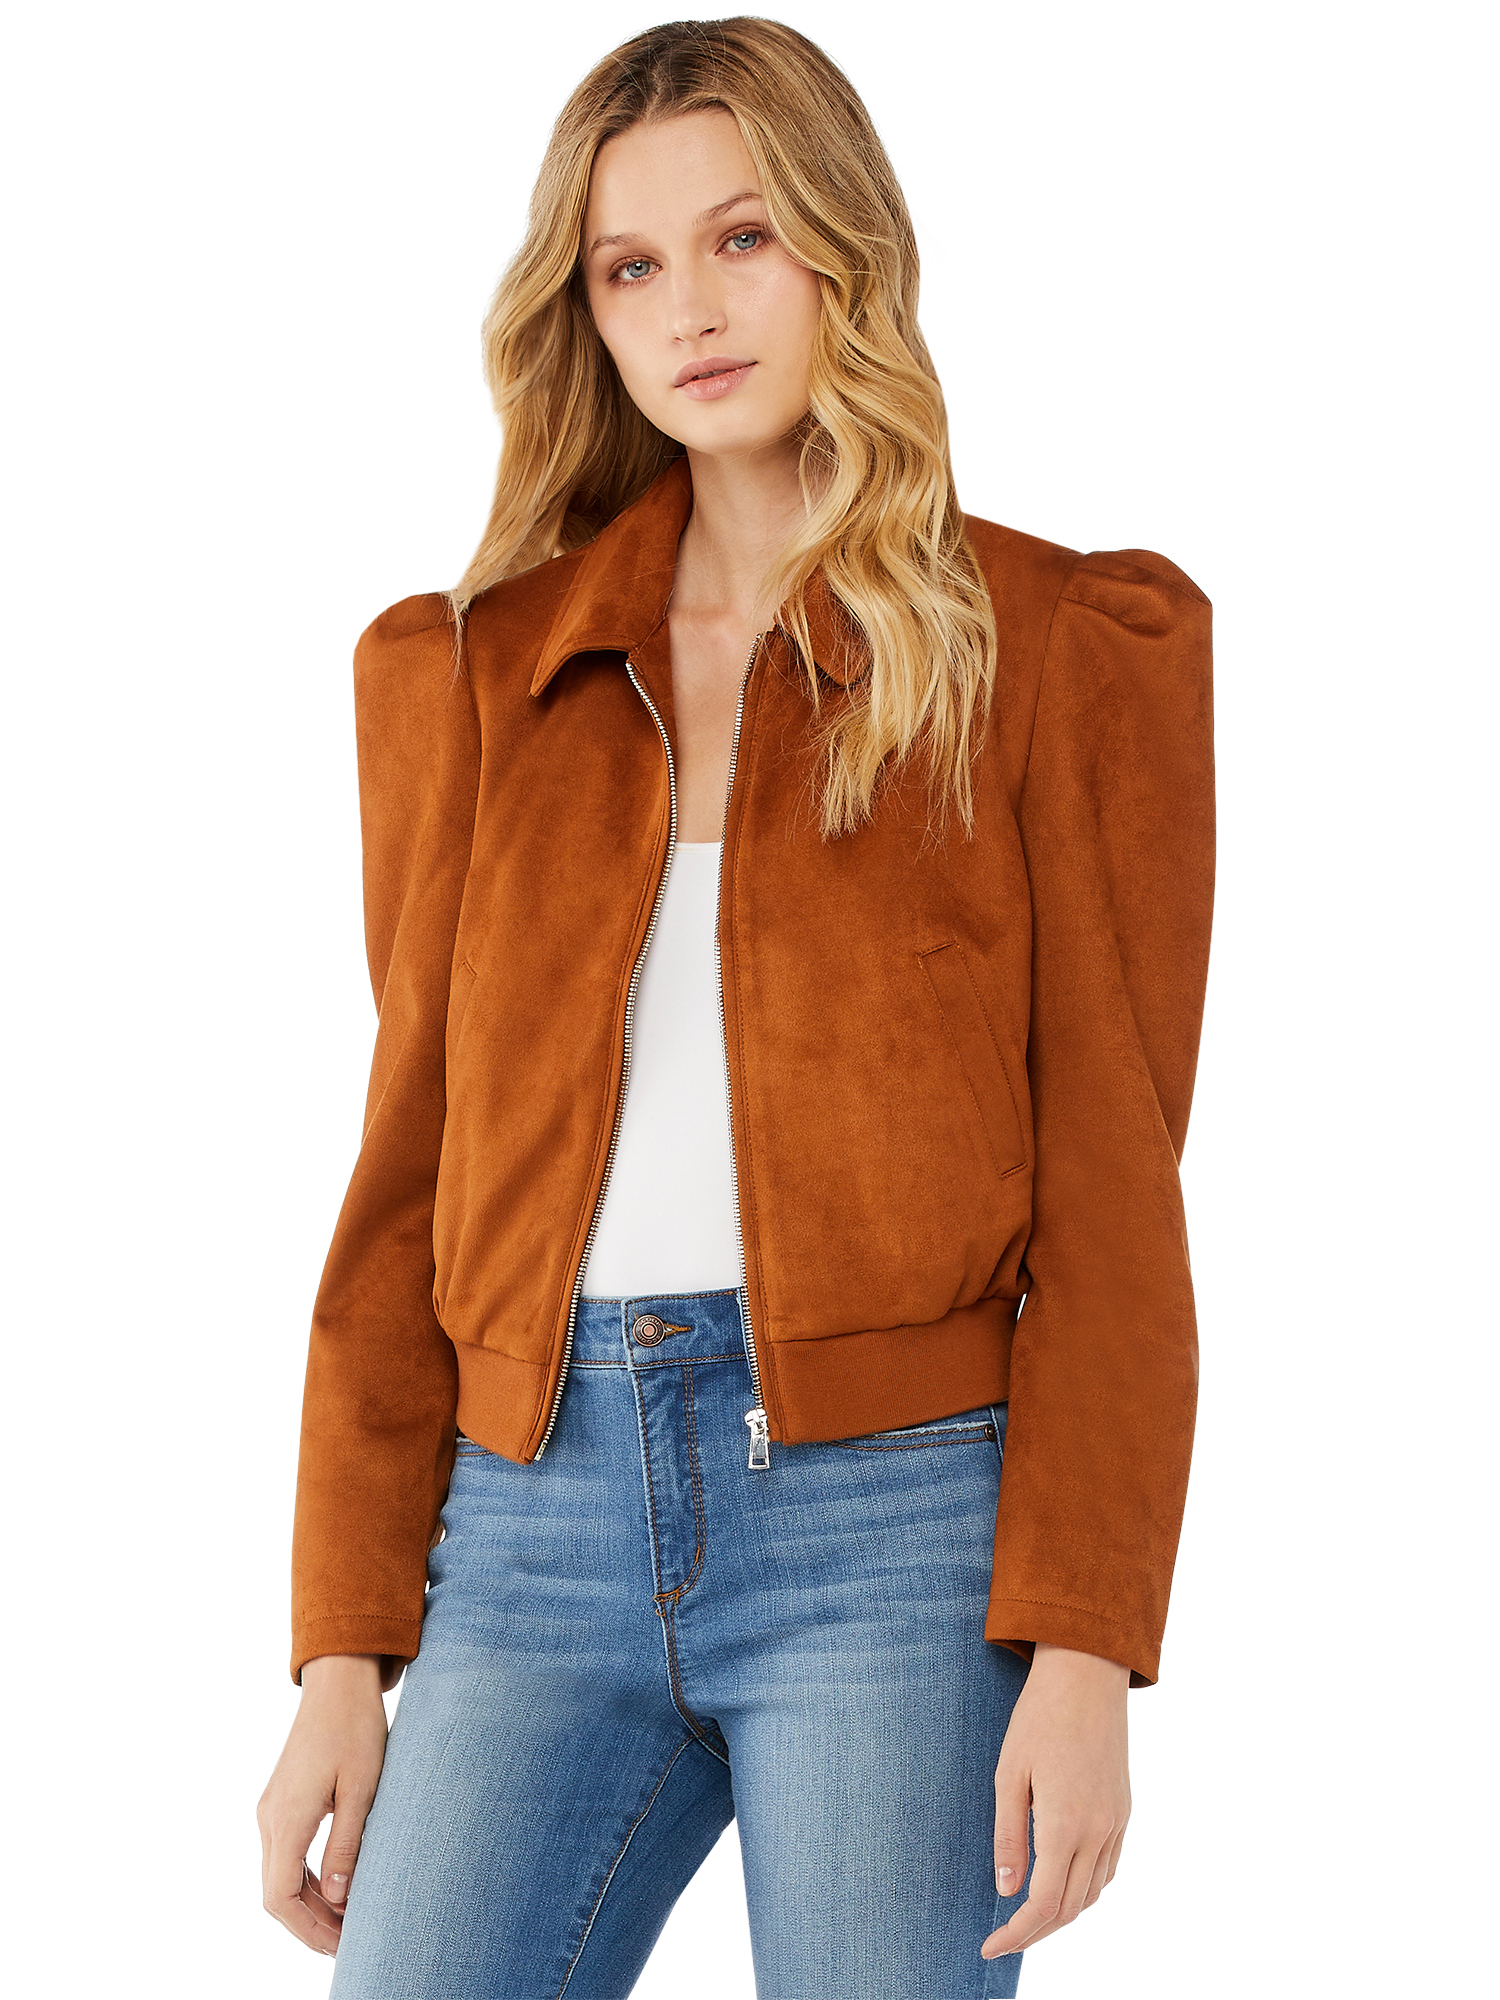 Scoop Long Sleeve Modern Fit Single-Breasted Jacket (Women's) 1 Pack - image 1 of 6